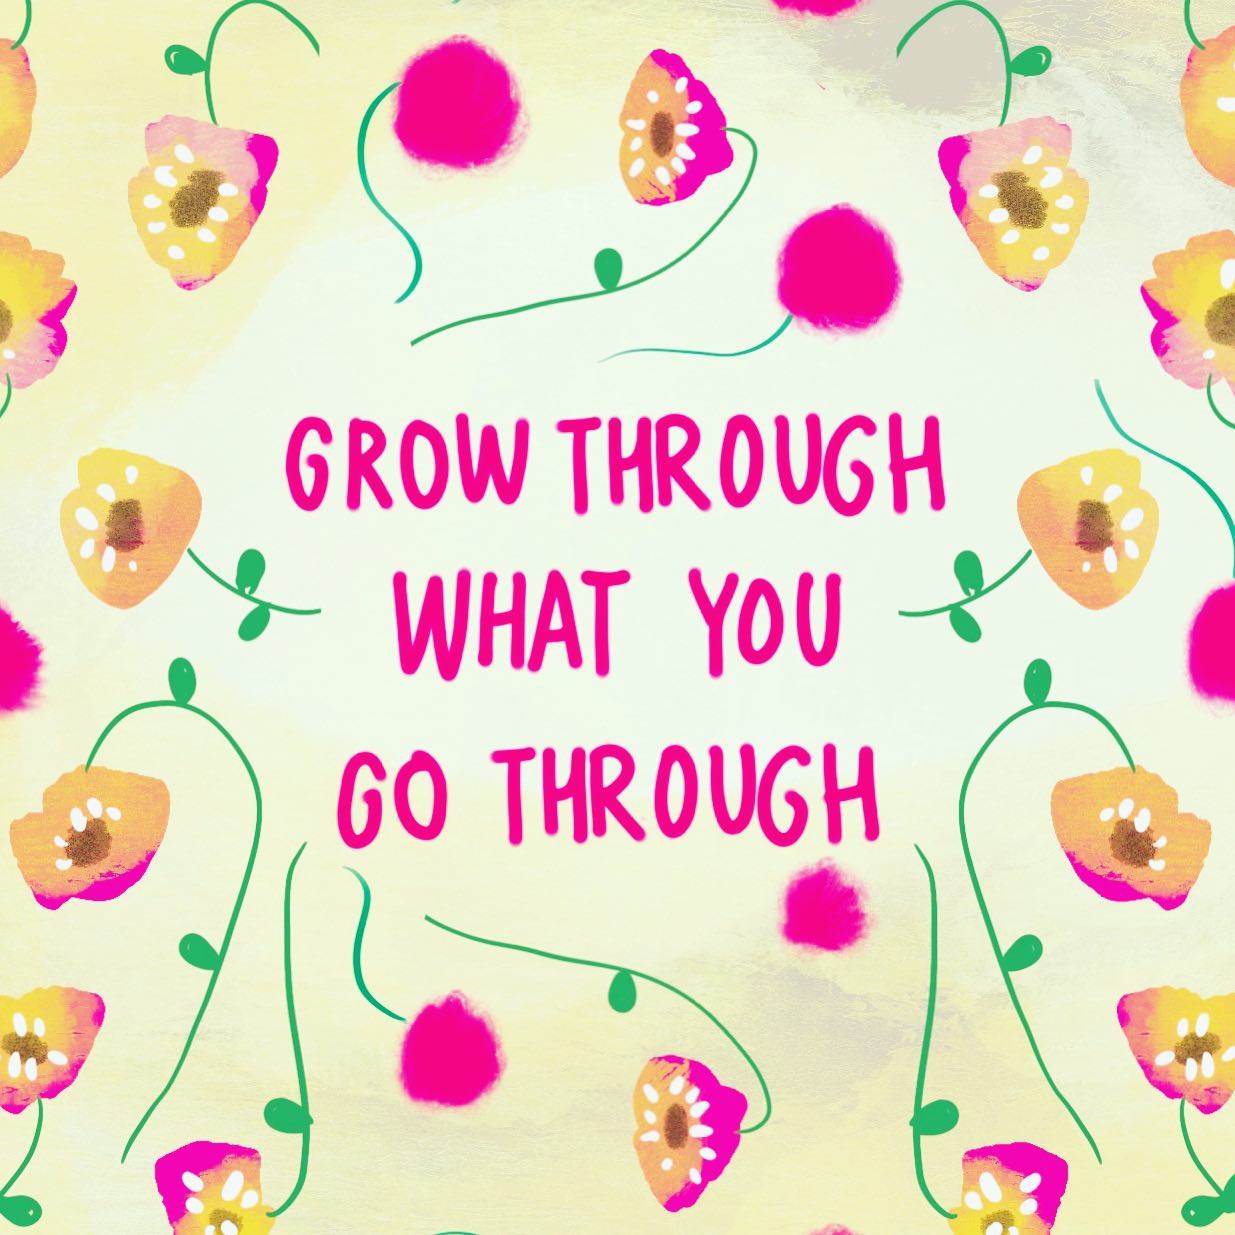 Grow through what you go through...